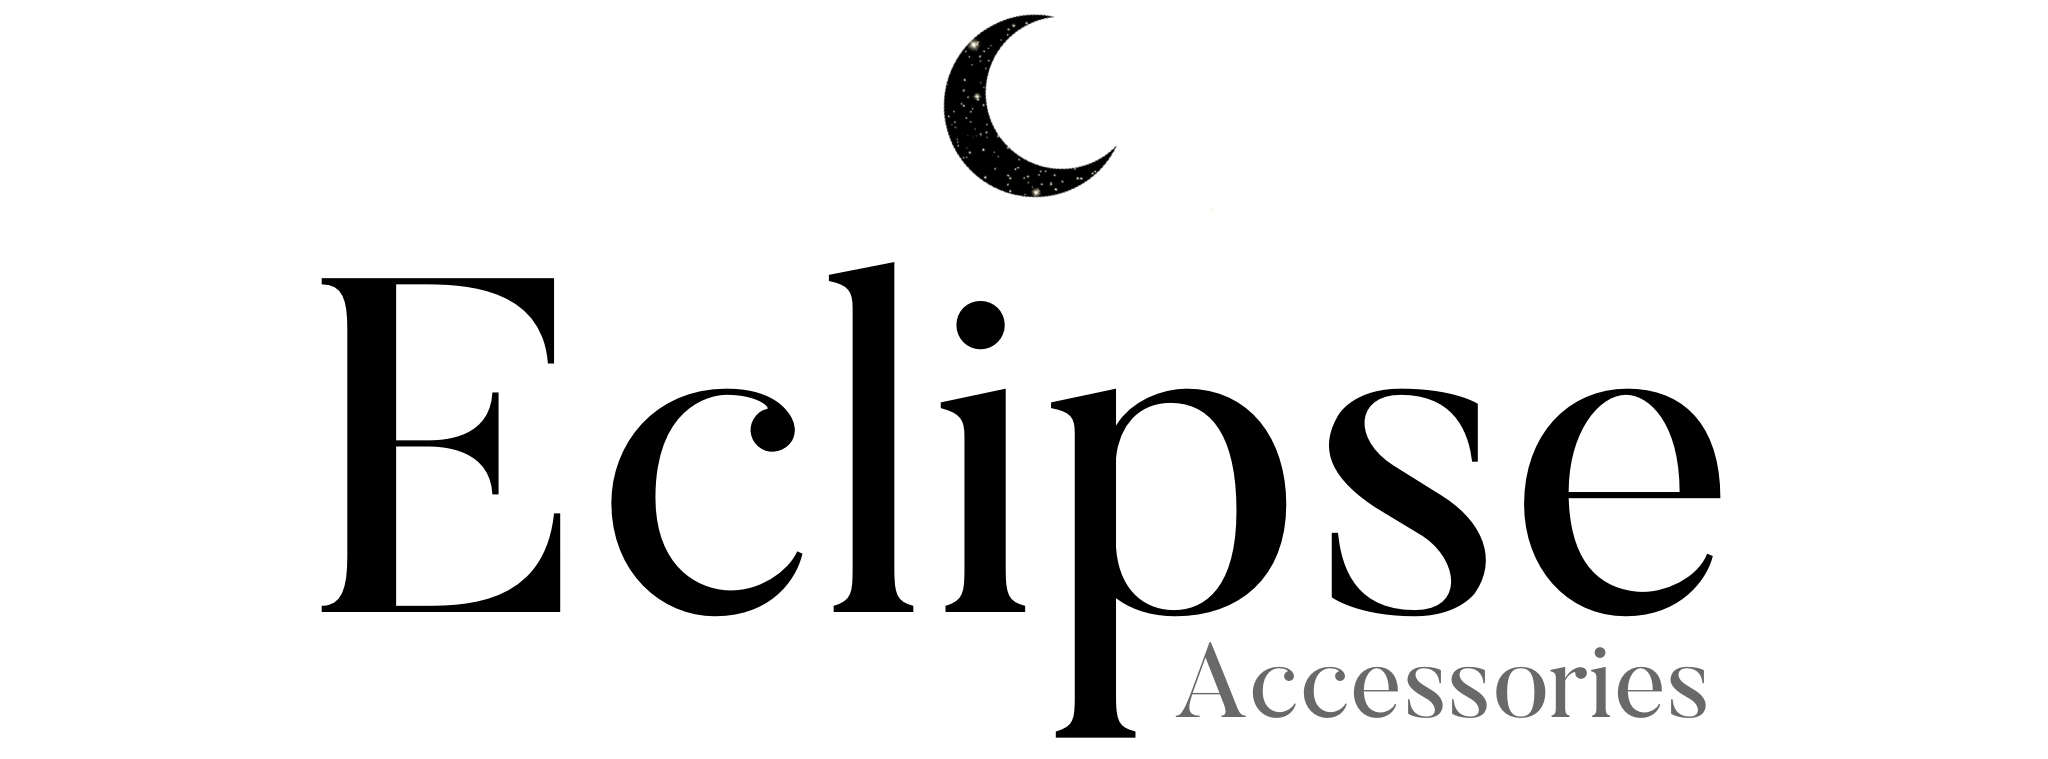 eclipse accessories – Eclipse Accessories